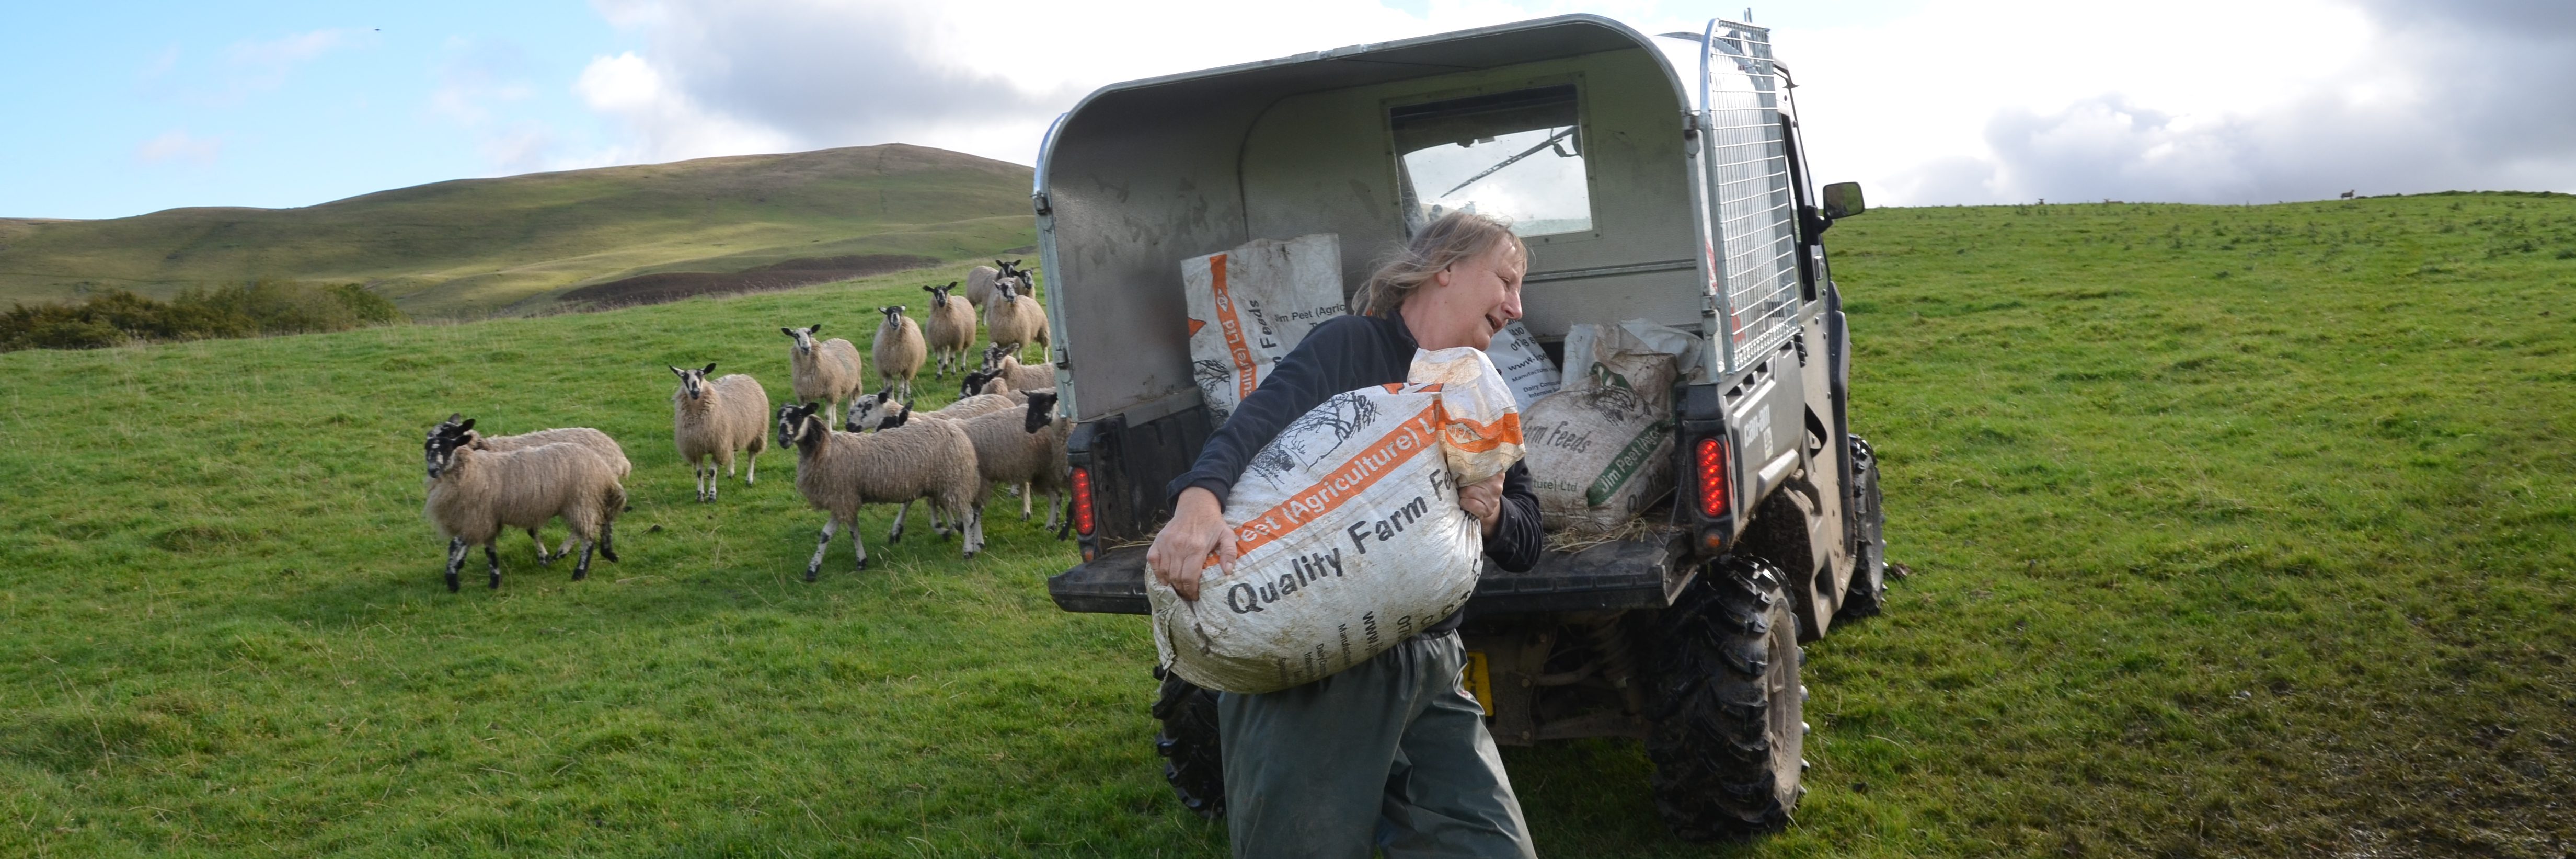 Tracing The Landscape: Cumbrian Farm Women